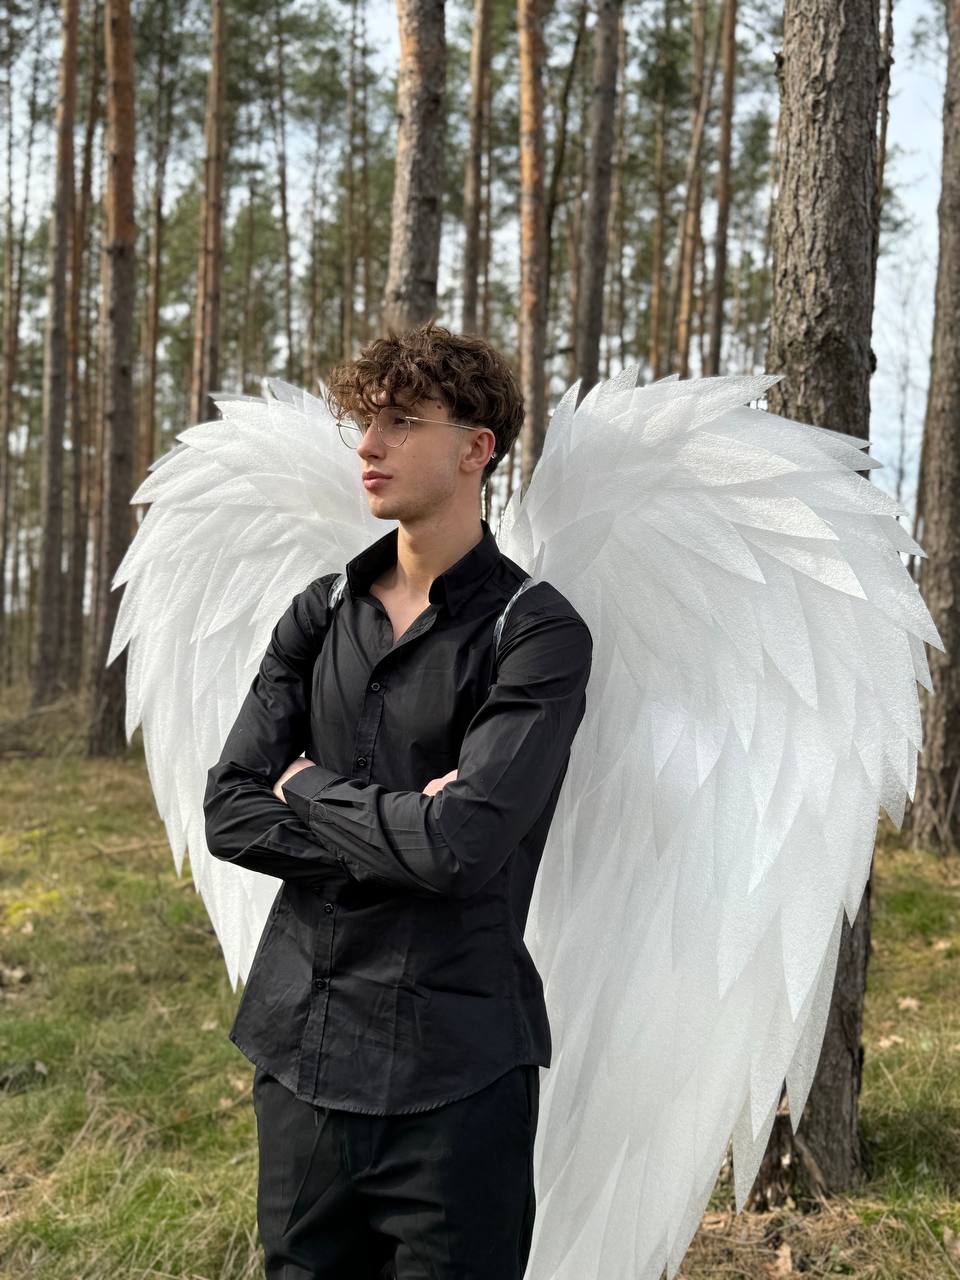 White Angel Wings Costume "Bogacci brand"